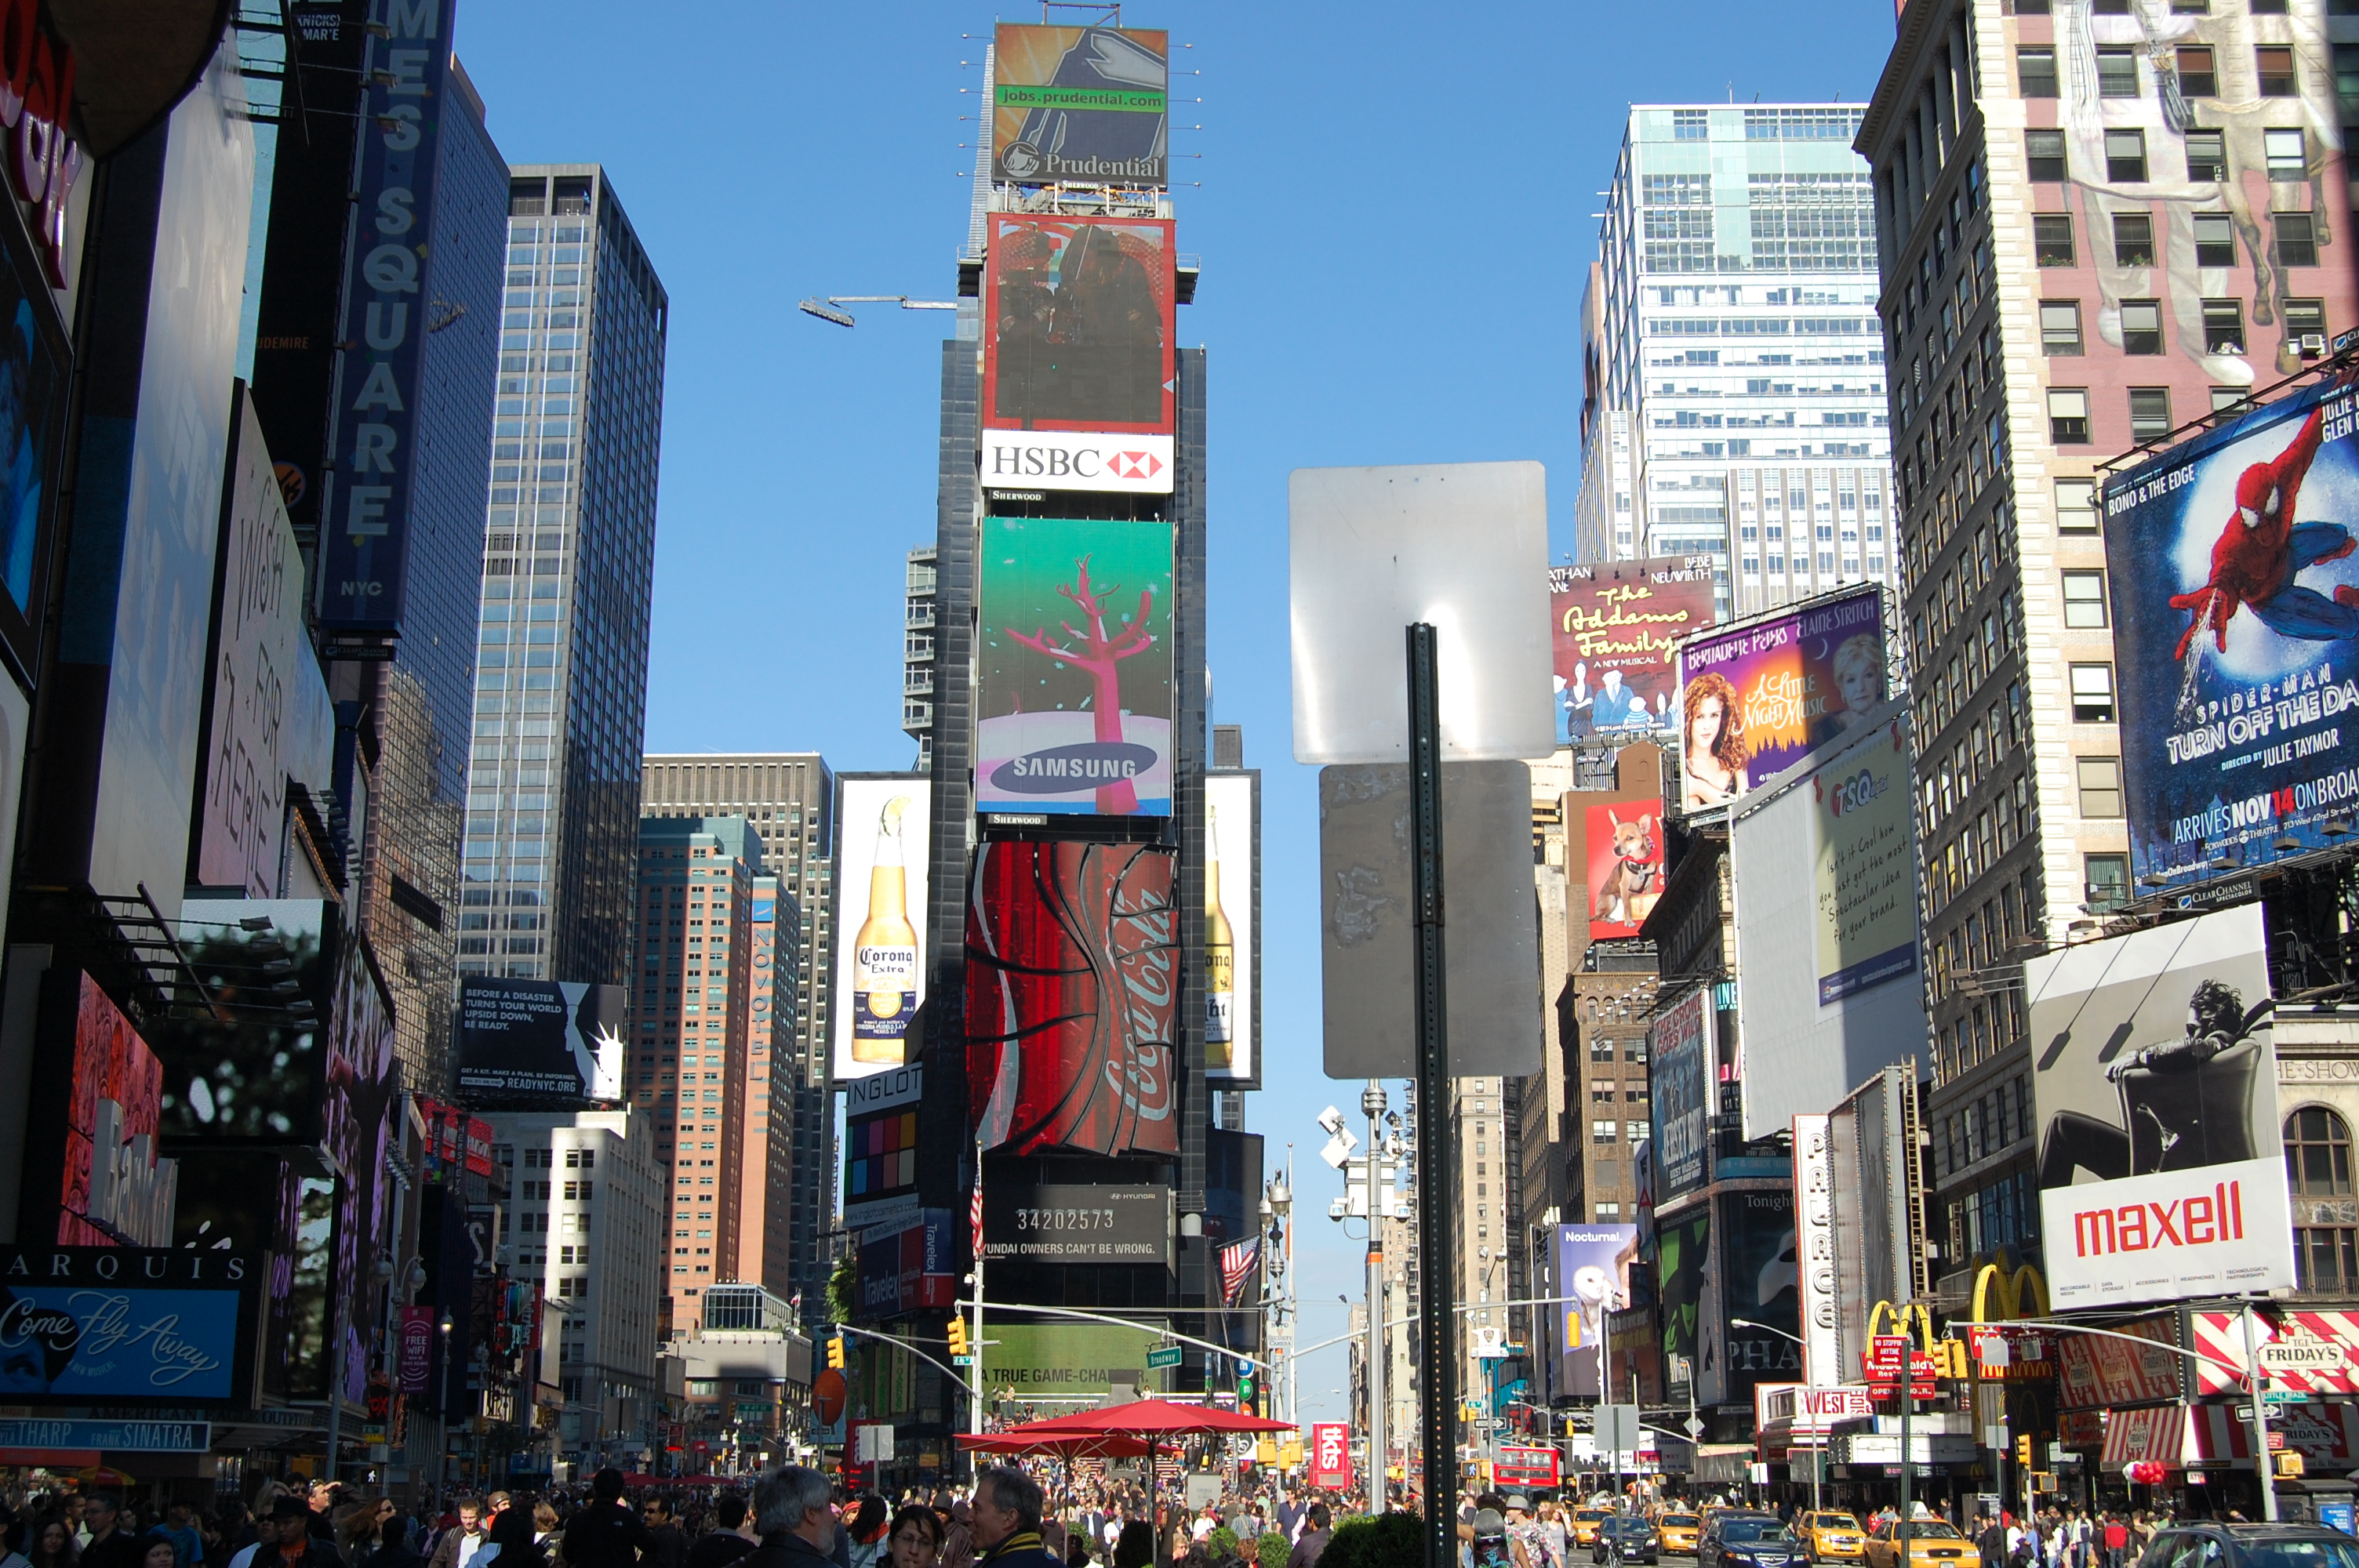 USA : New York, Times Square